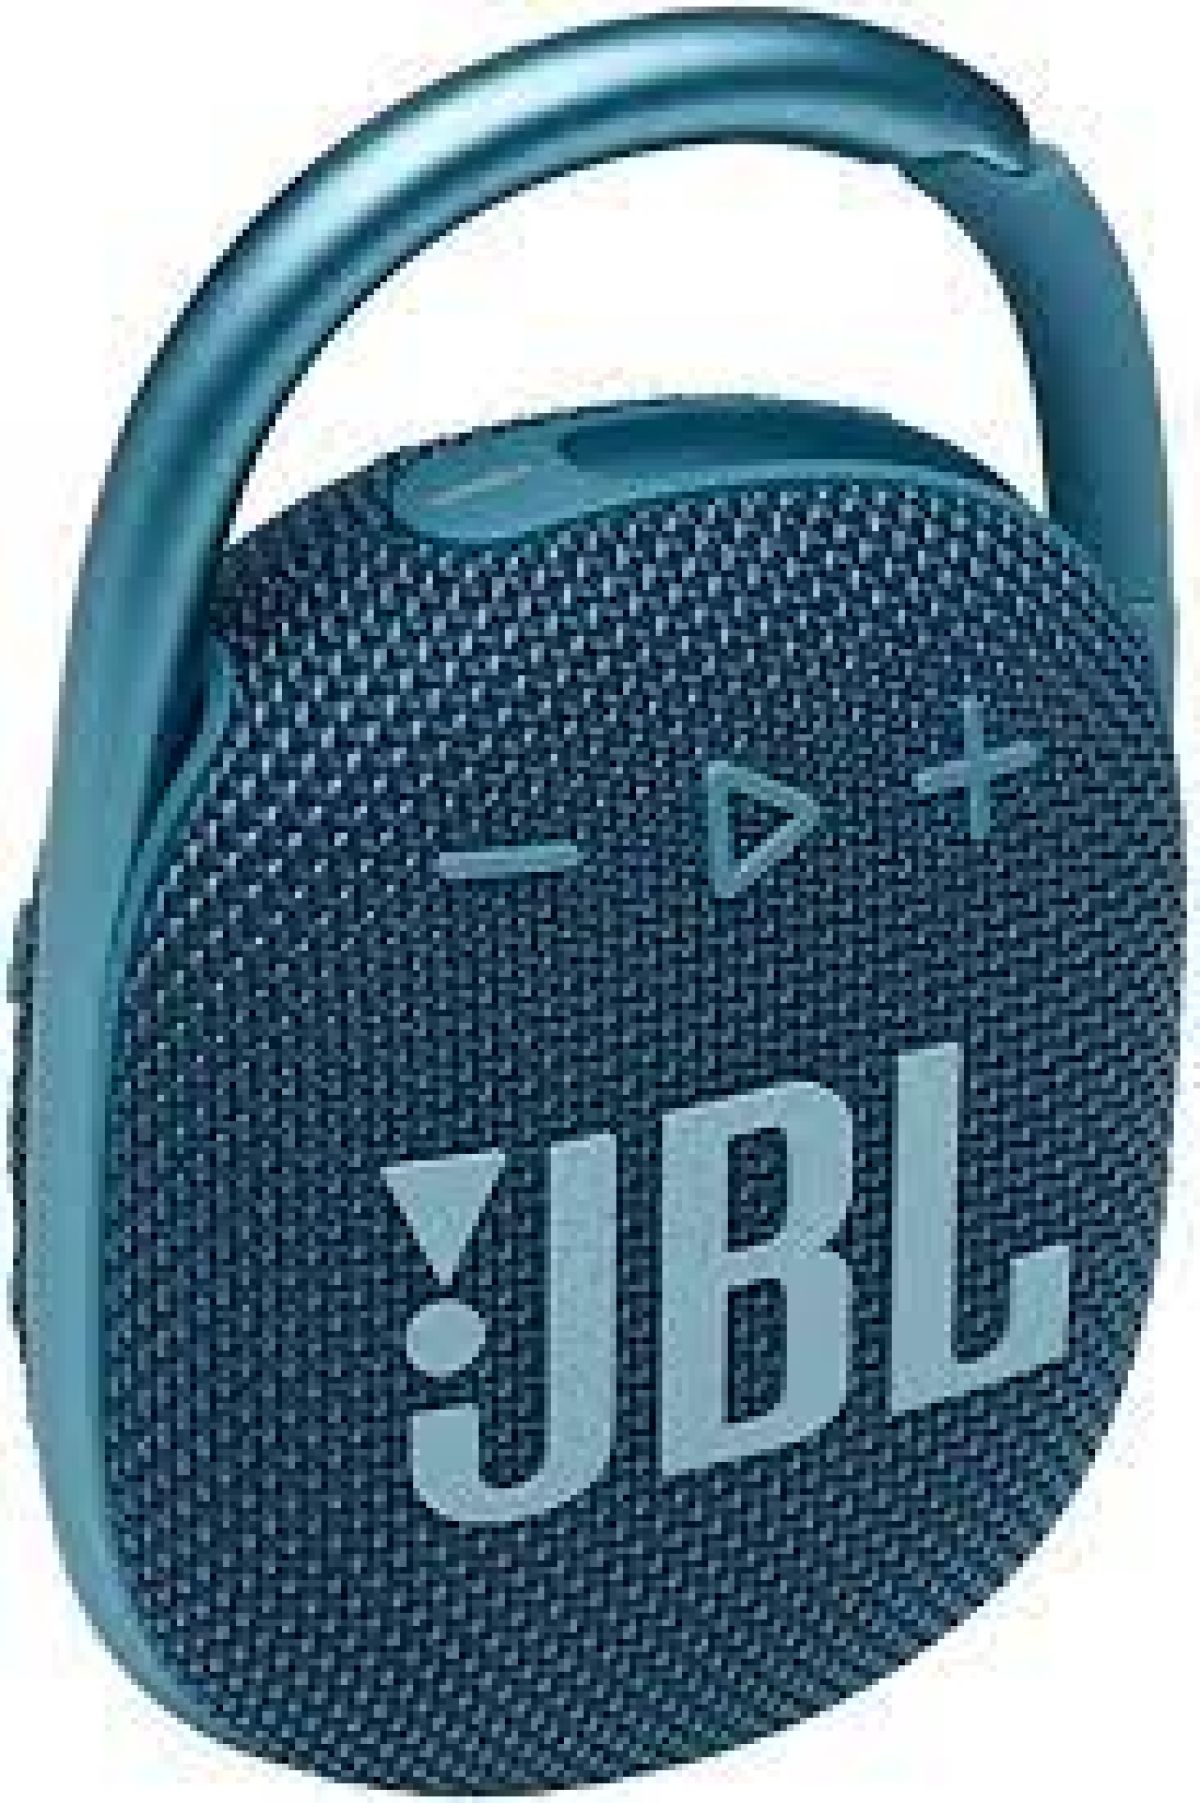 JBL Clip 4 Bluetooth Bleu Type C